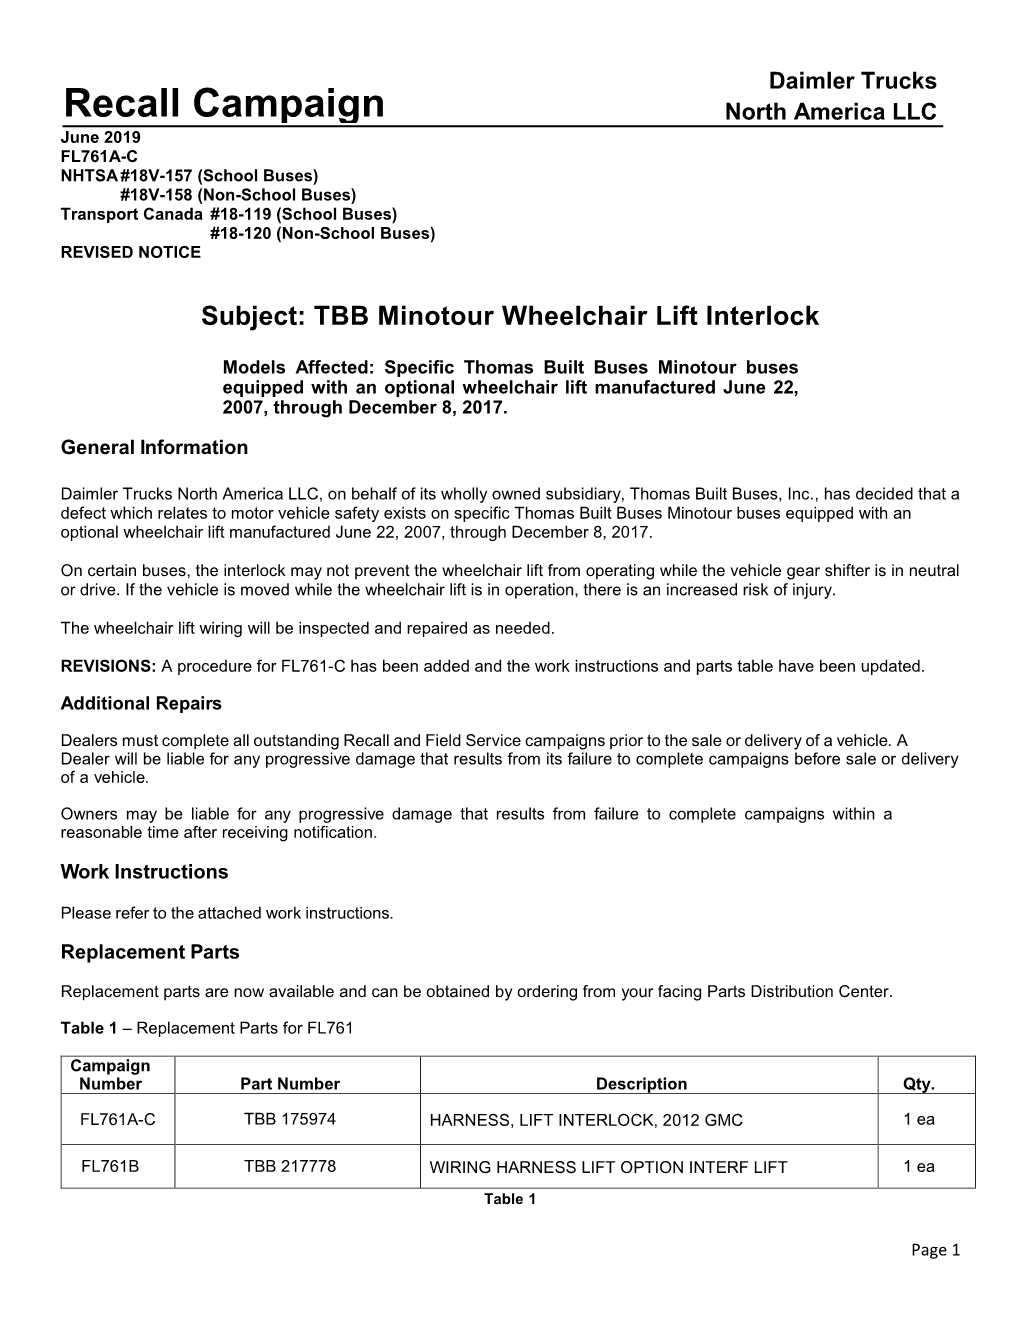 TBB Minotour Wheelchair Lift Interlock